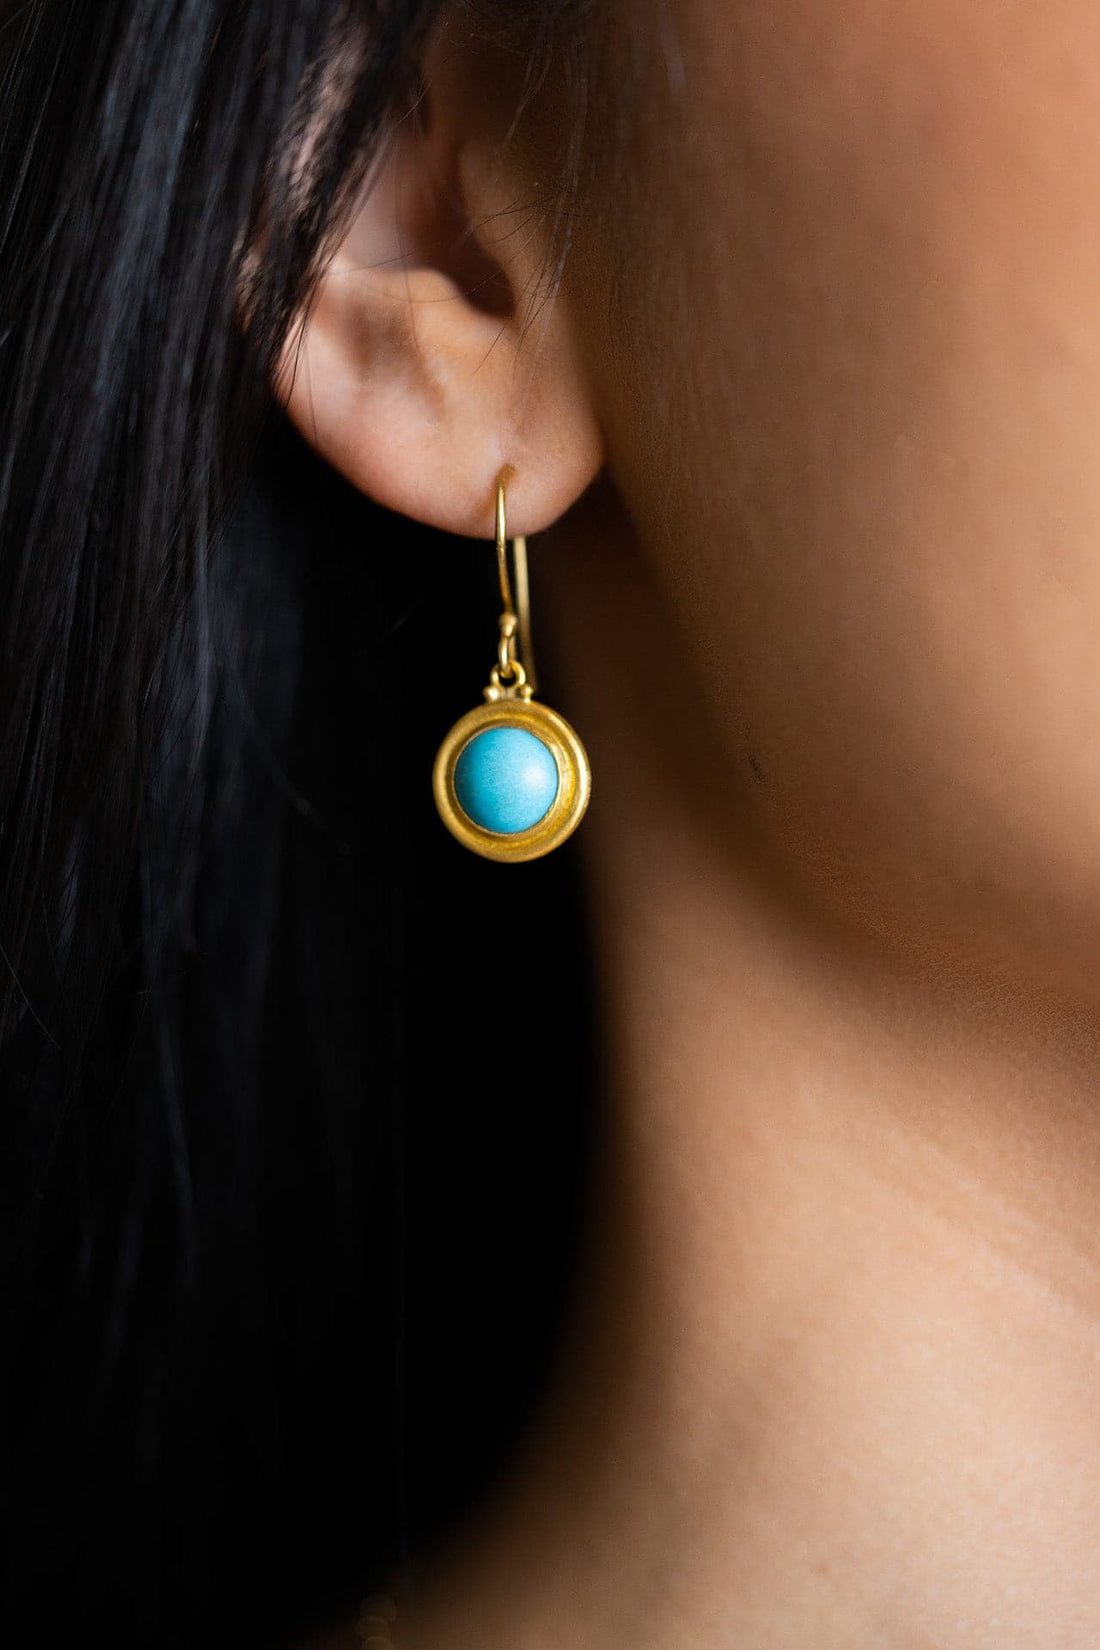 Lika Behar Yellow Gold Turquoise Dangle Earrings - Skeie's Jewelers